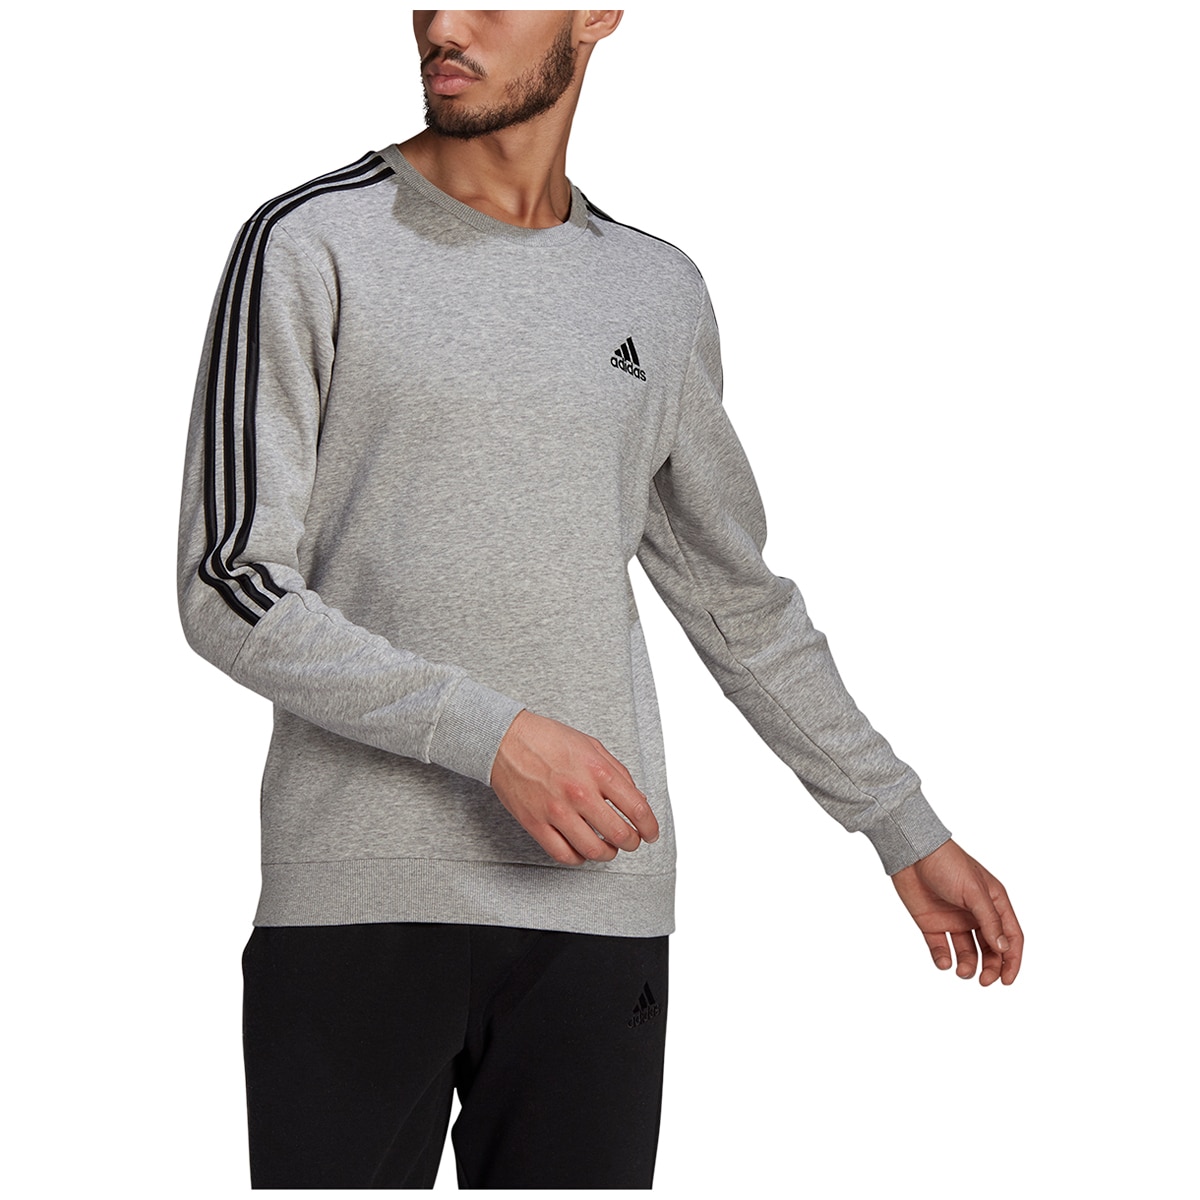 Adidas Fleece Sweater